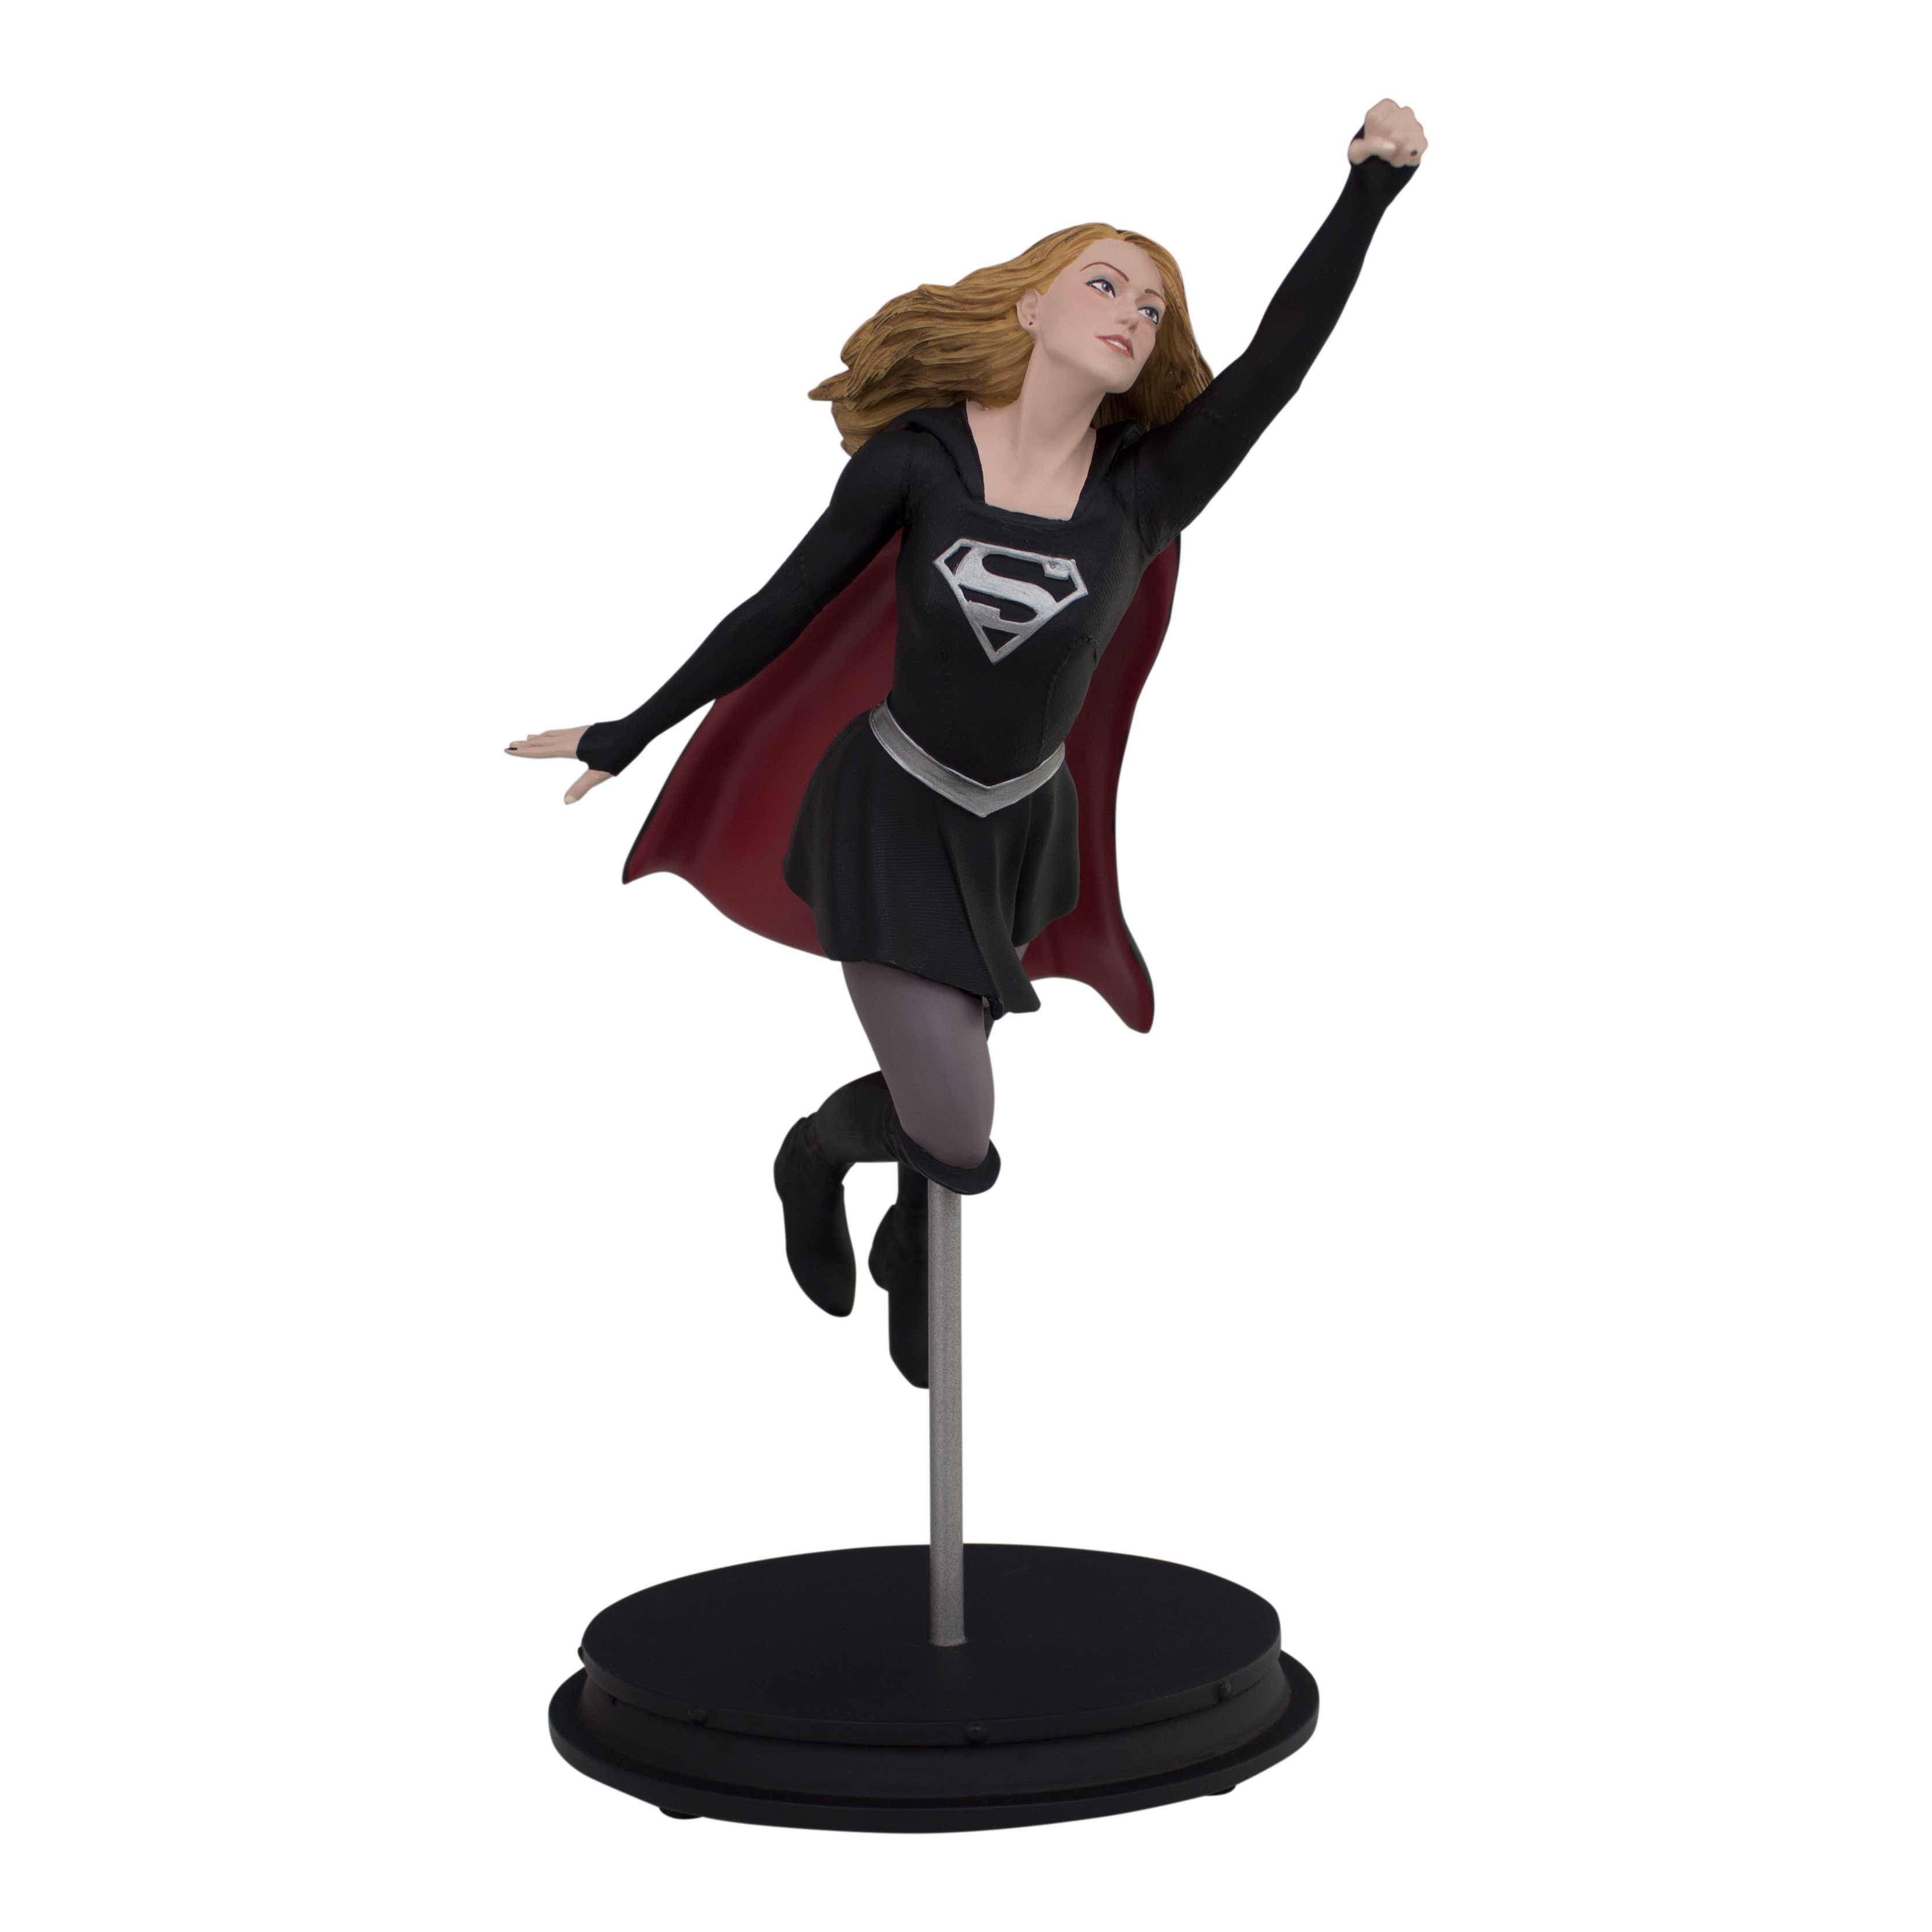 002-icon-heroes-dark-supergirl-figure